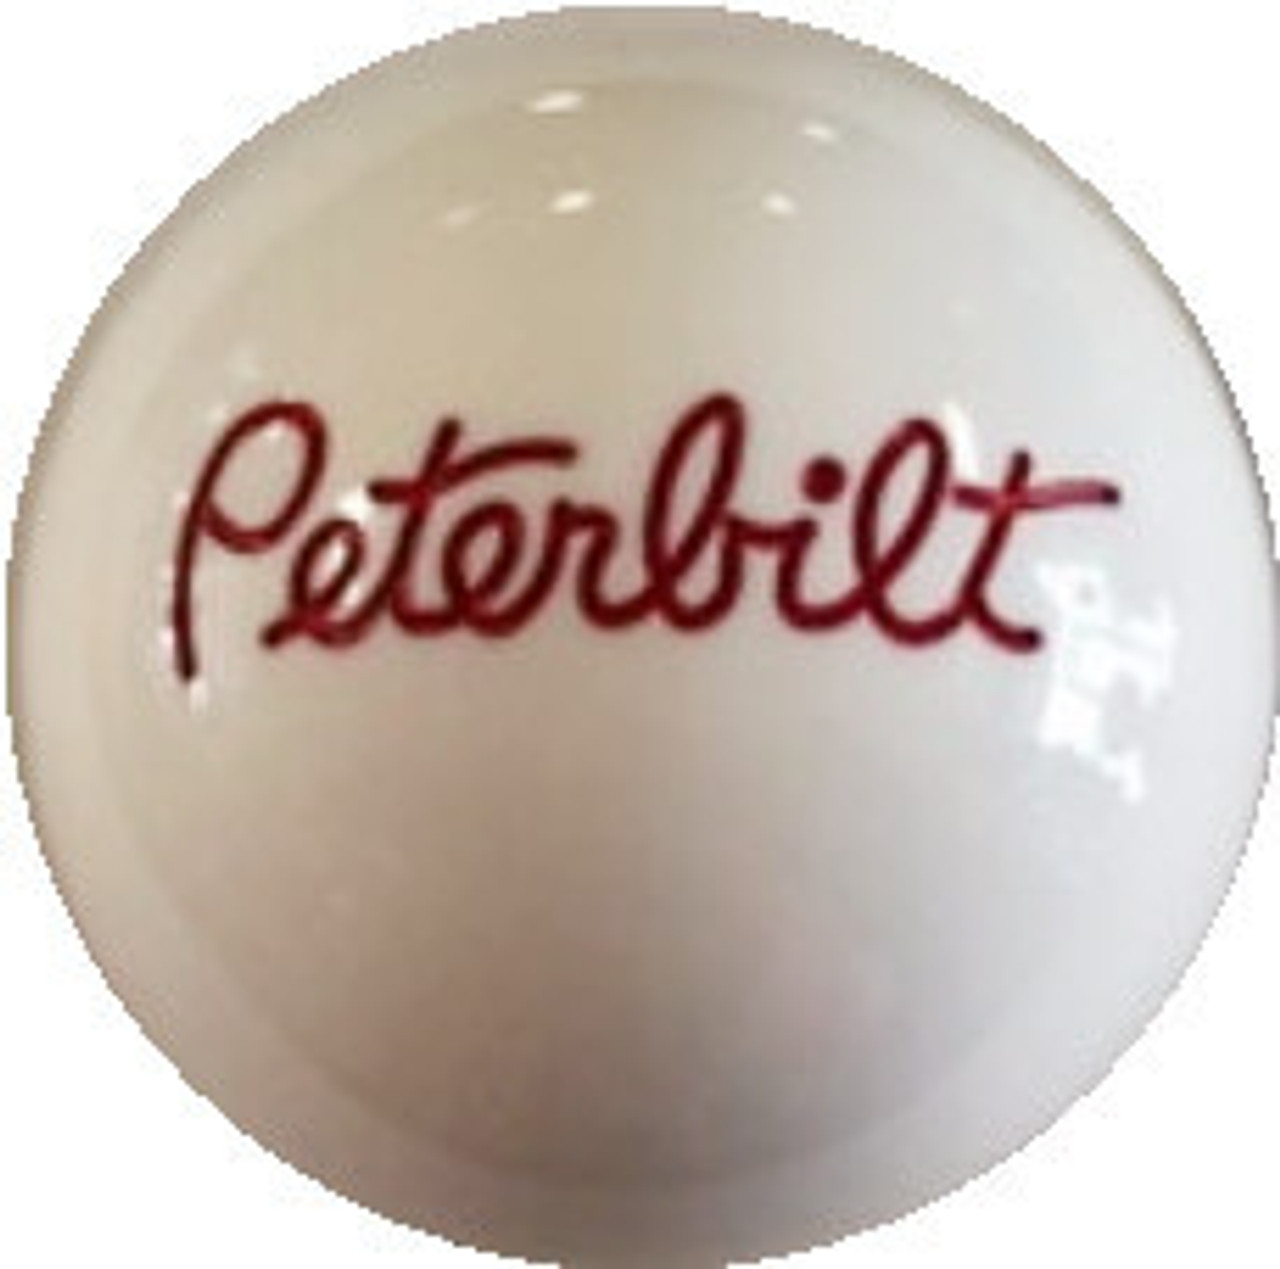 Single Round Brake Knob with "Peterbilt" Engraved